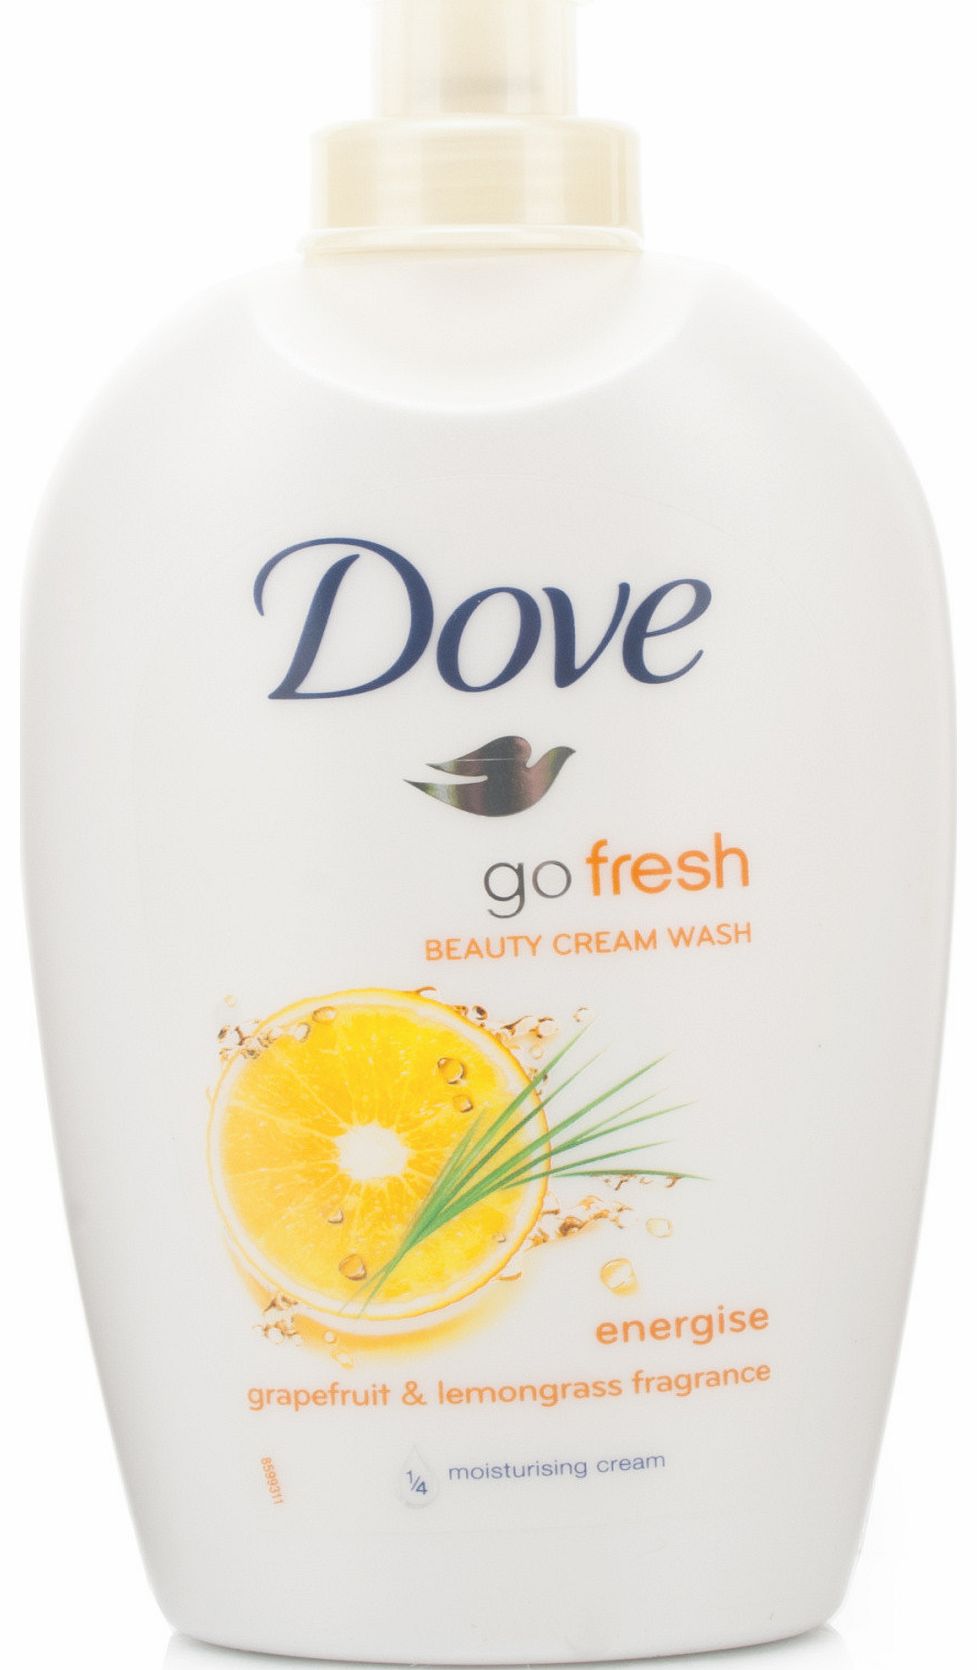 Dove go fresh Energise Beauty Cream Handwash